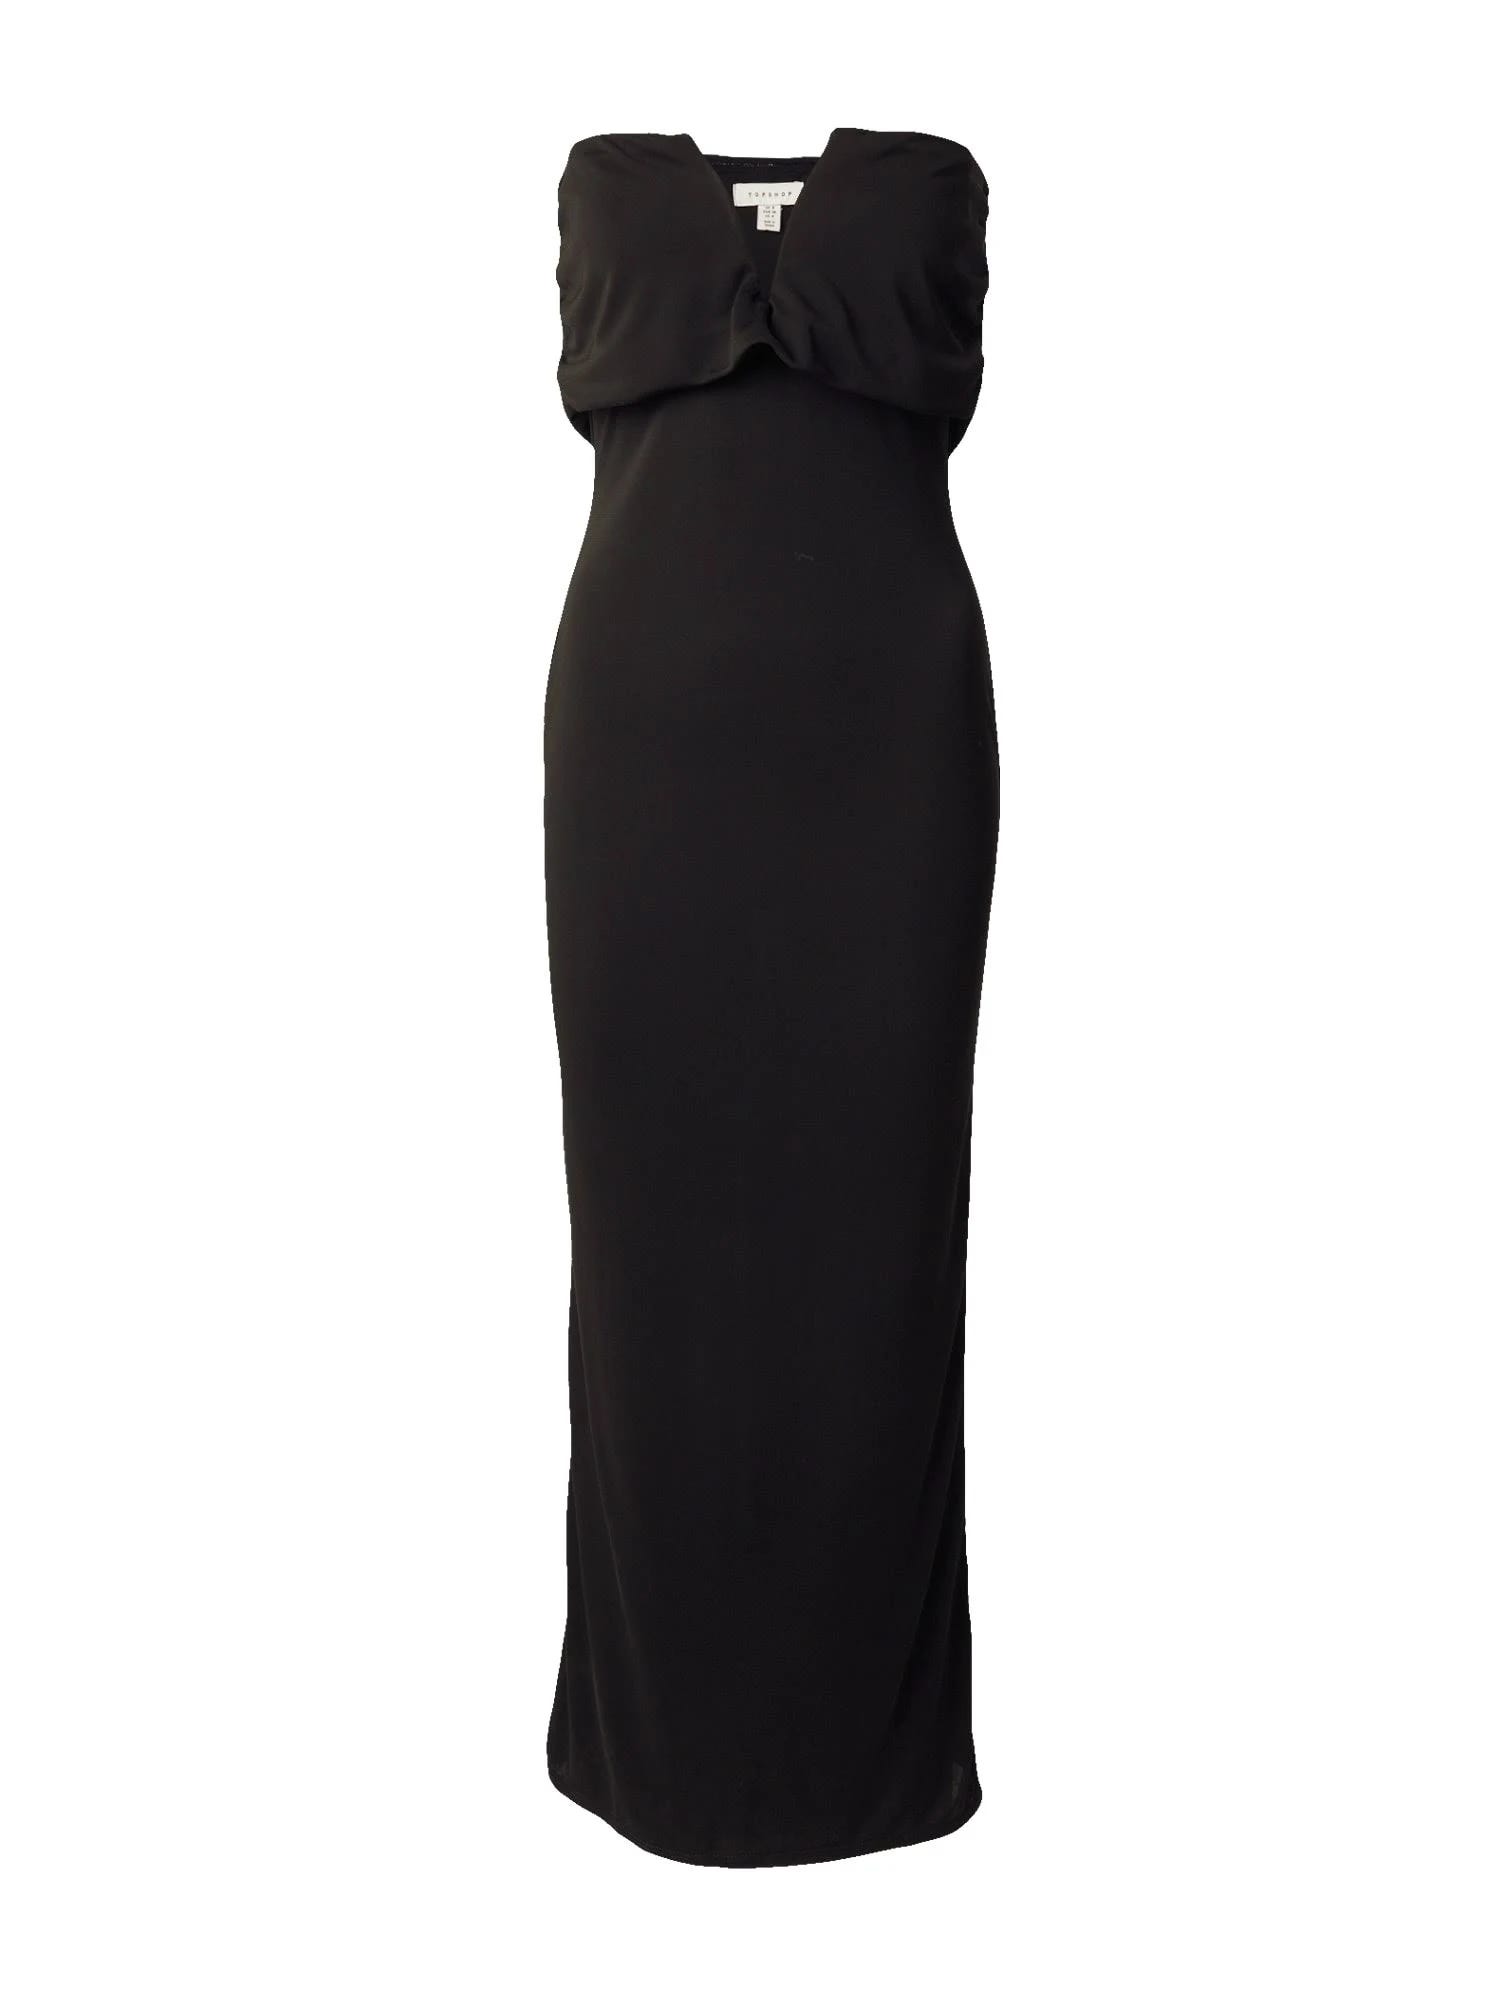 Black Off-Shoulder Midi Dress with Notch Neckline | Image